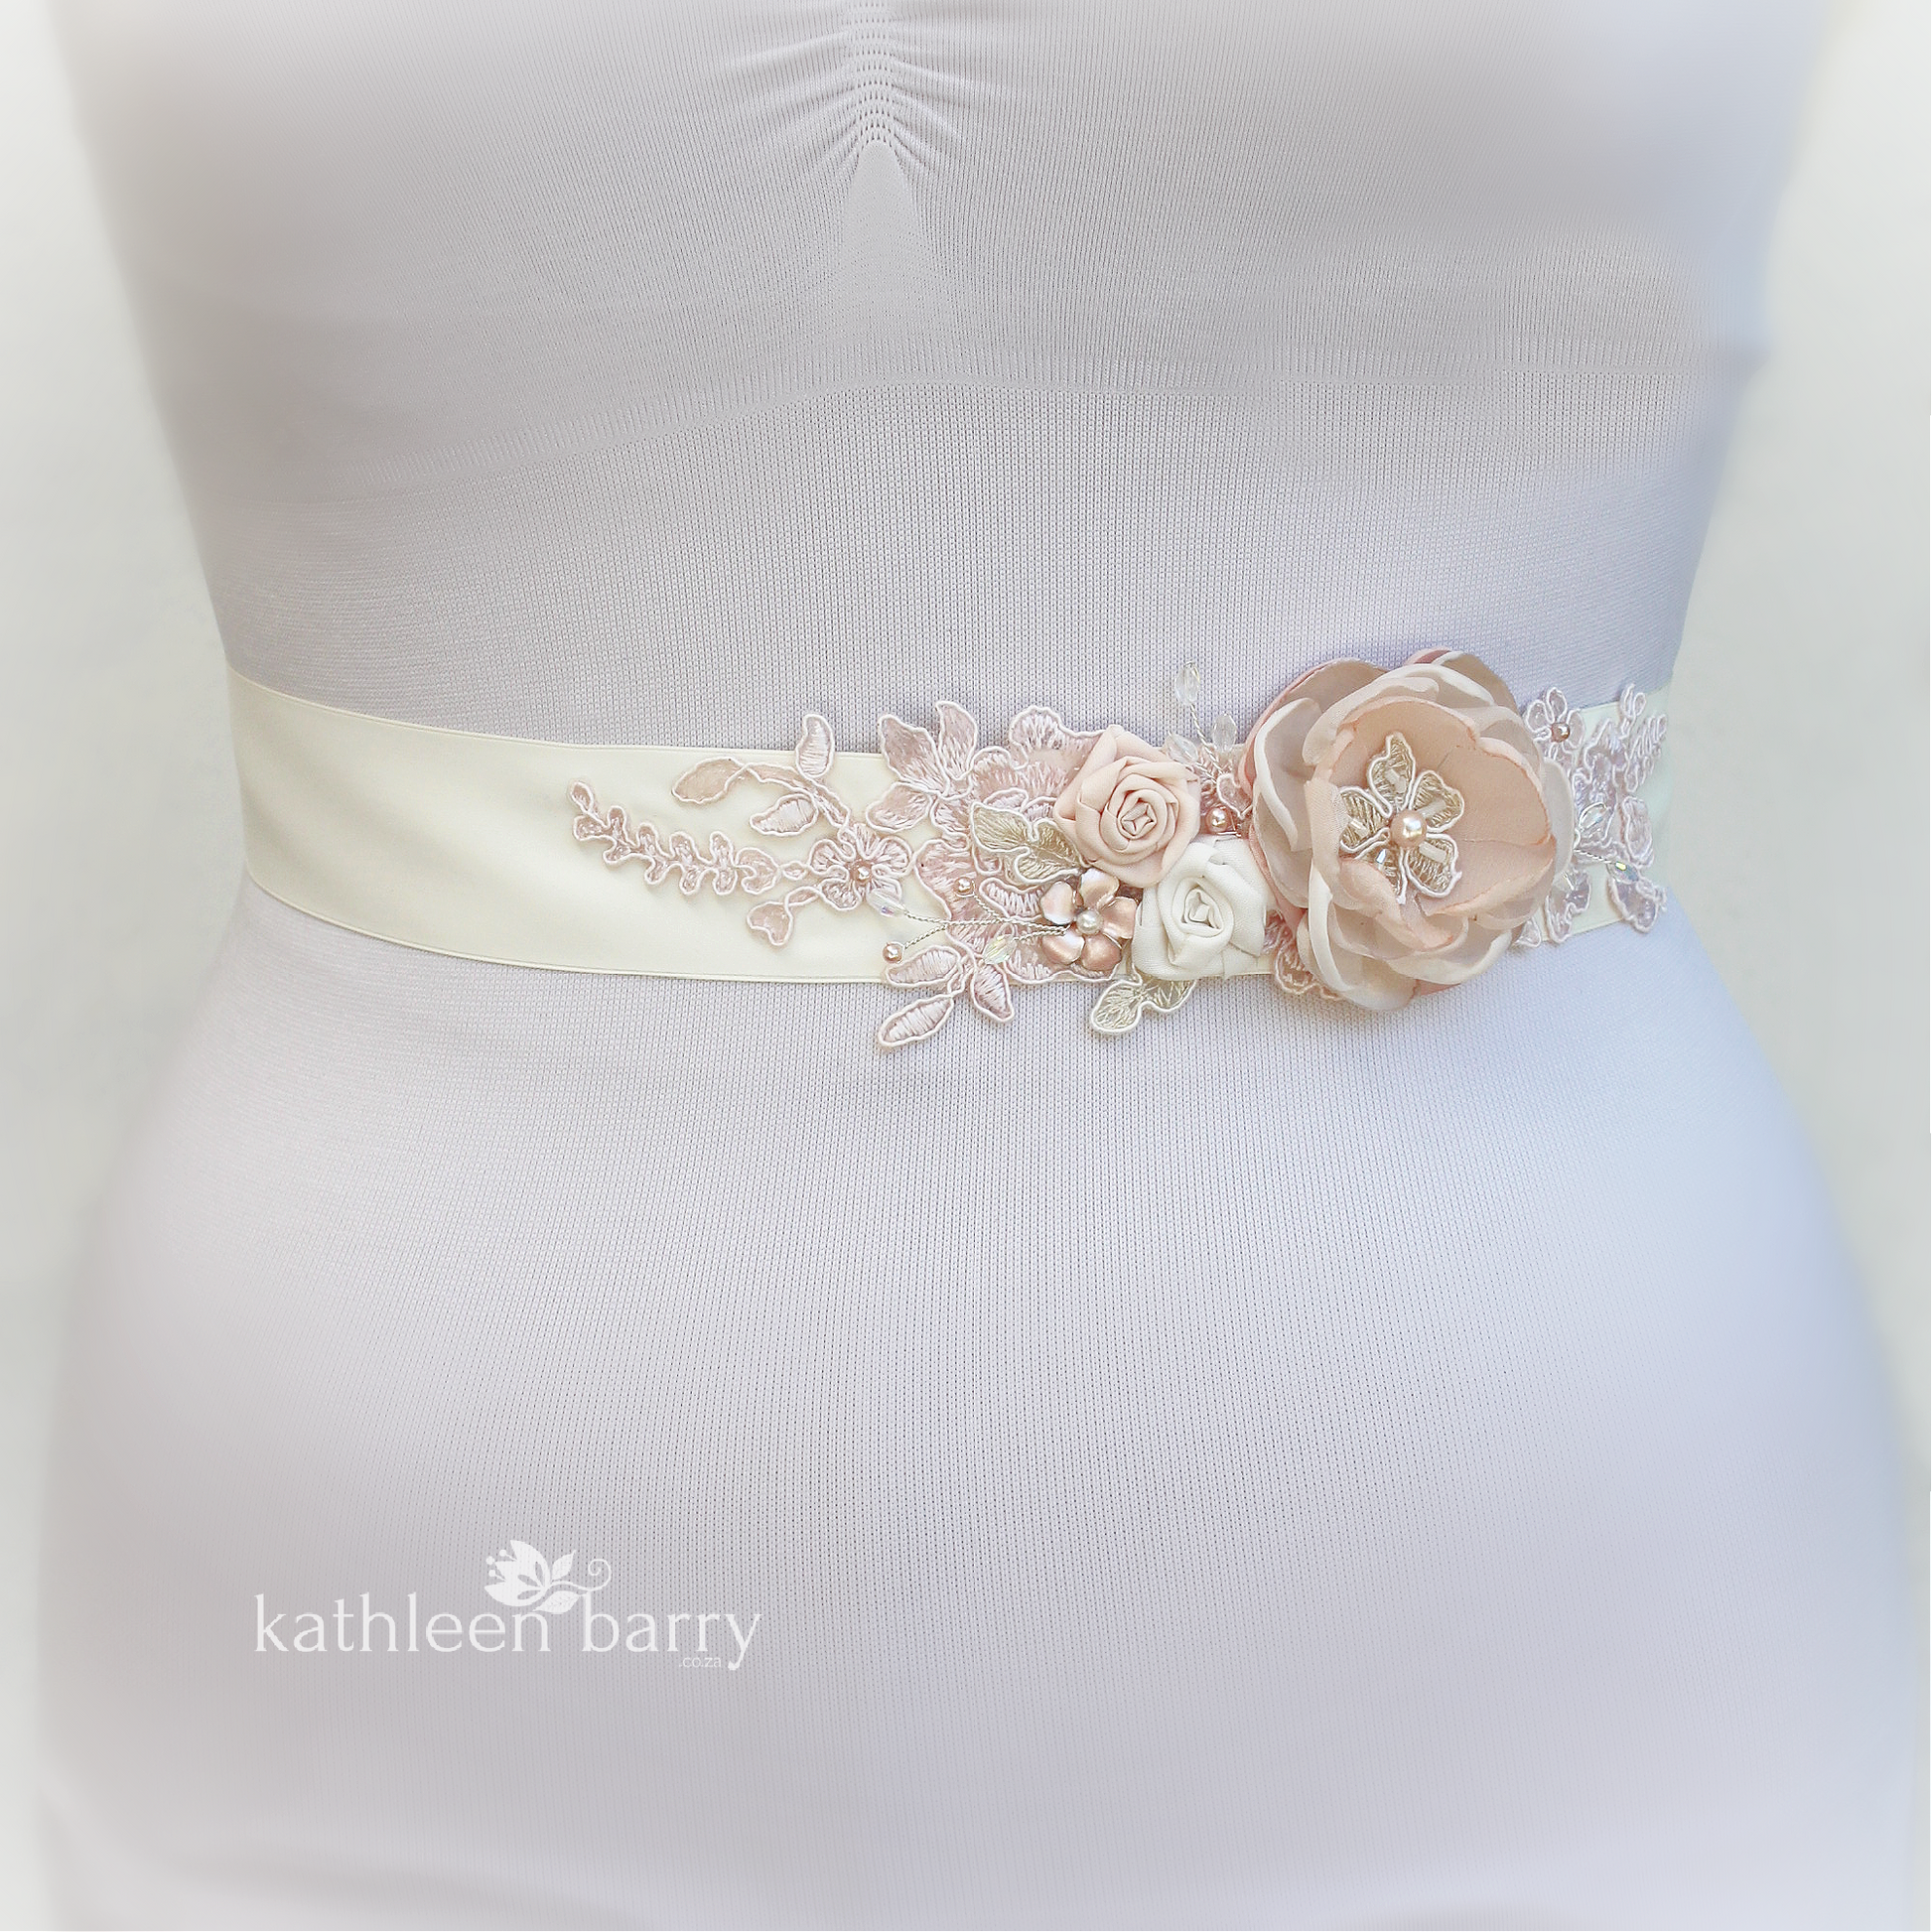 Wedding dress sash bridal belt floral with lace - Blush pink - soft pink colors to order online